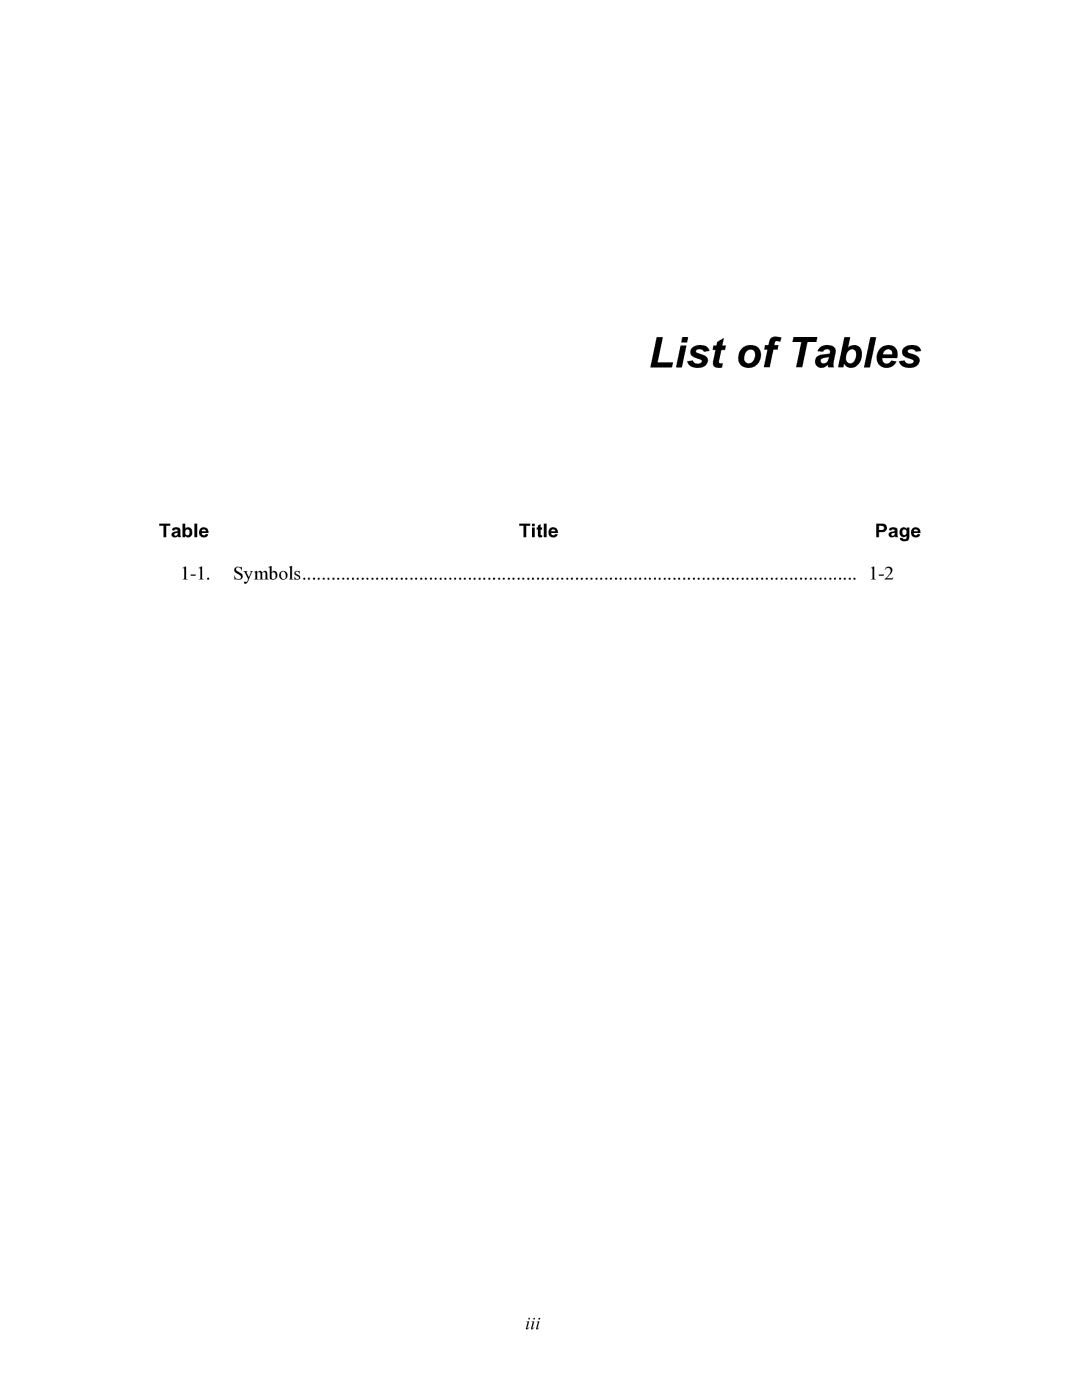 Fluke 2470 specifications List of Tables 